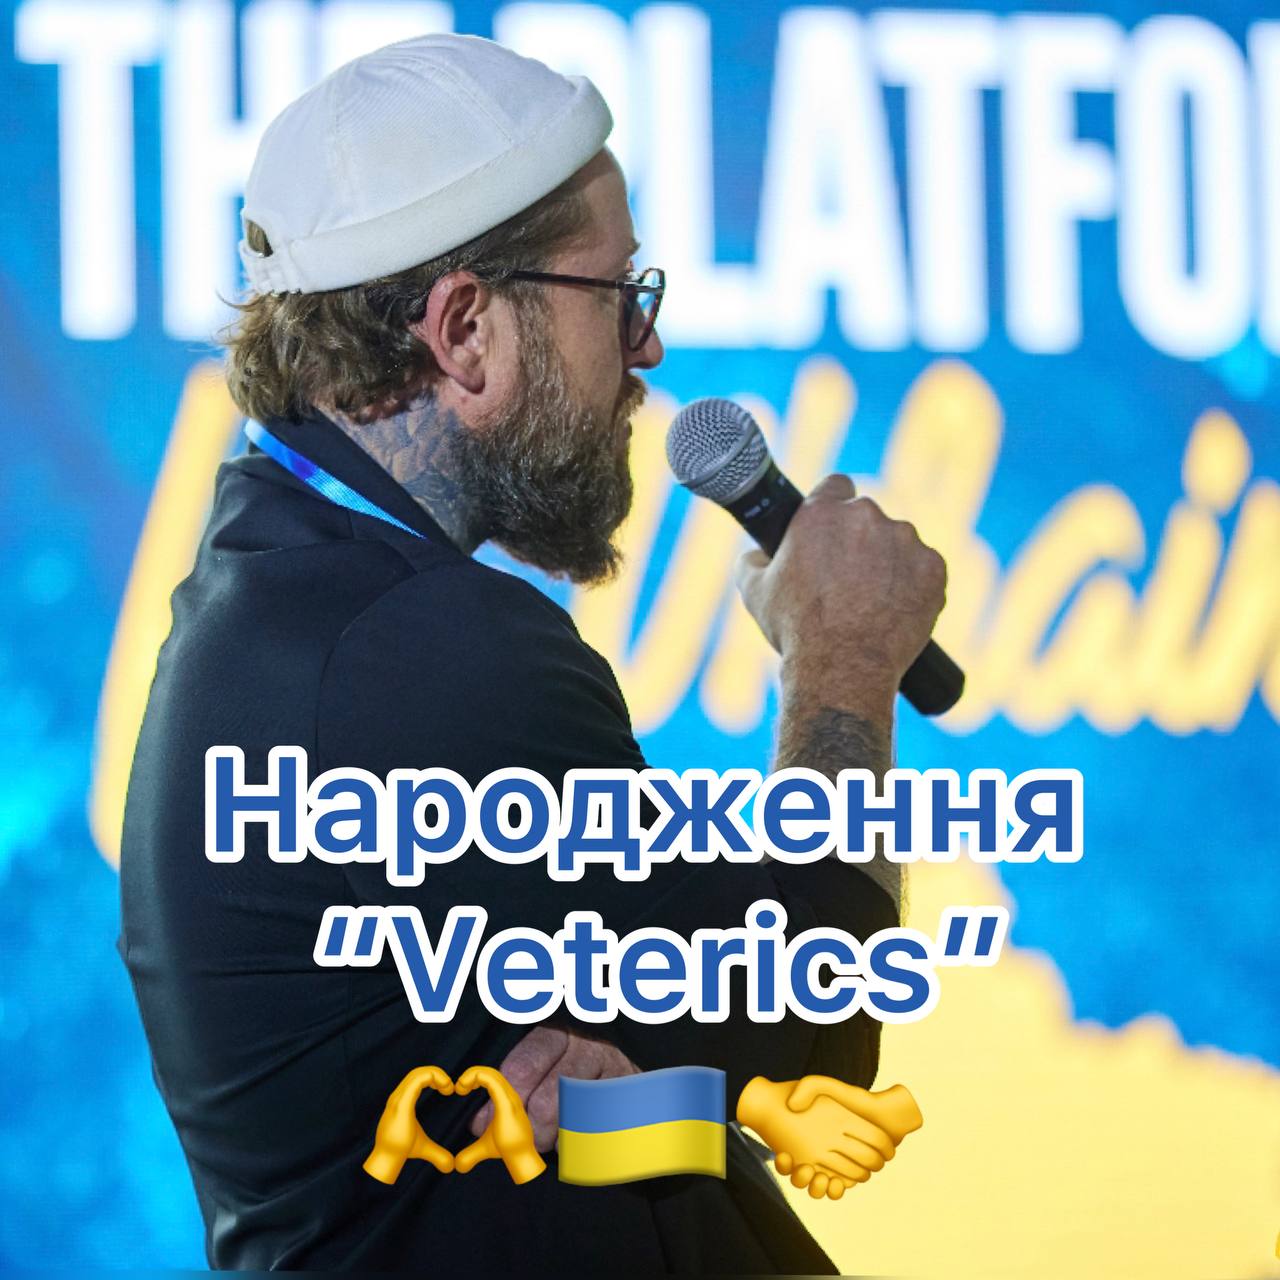 «VETERICS» - ЗАСТОСУНОК для ГЕРОЇВ! / ТопГард/ TopGuard.UA